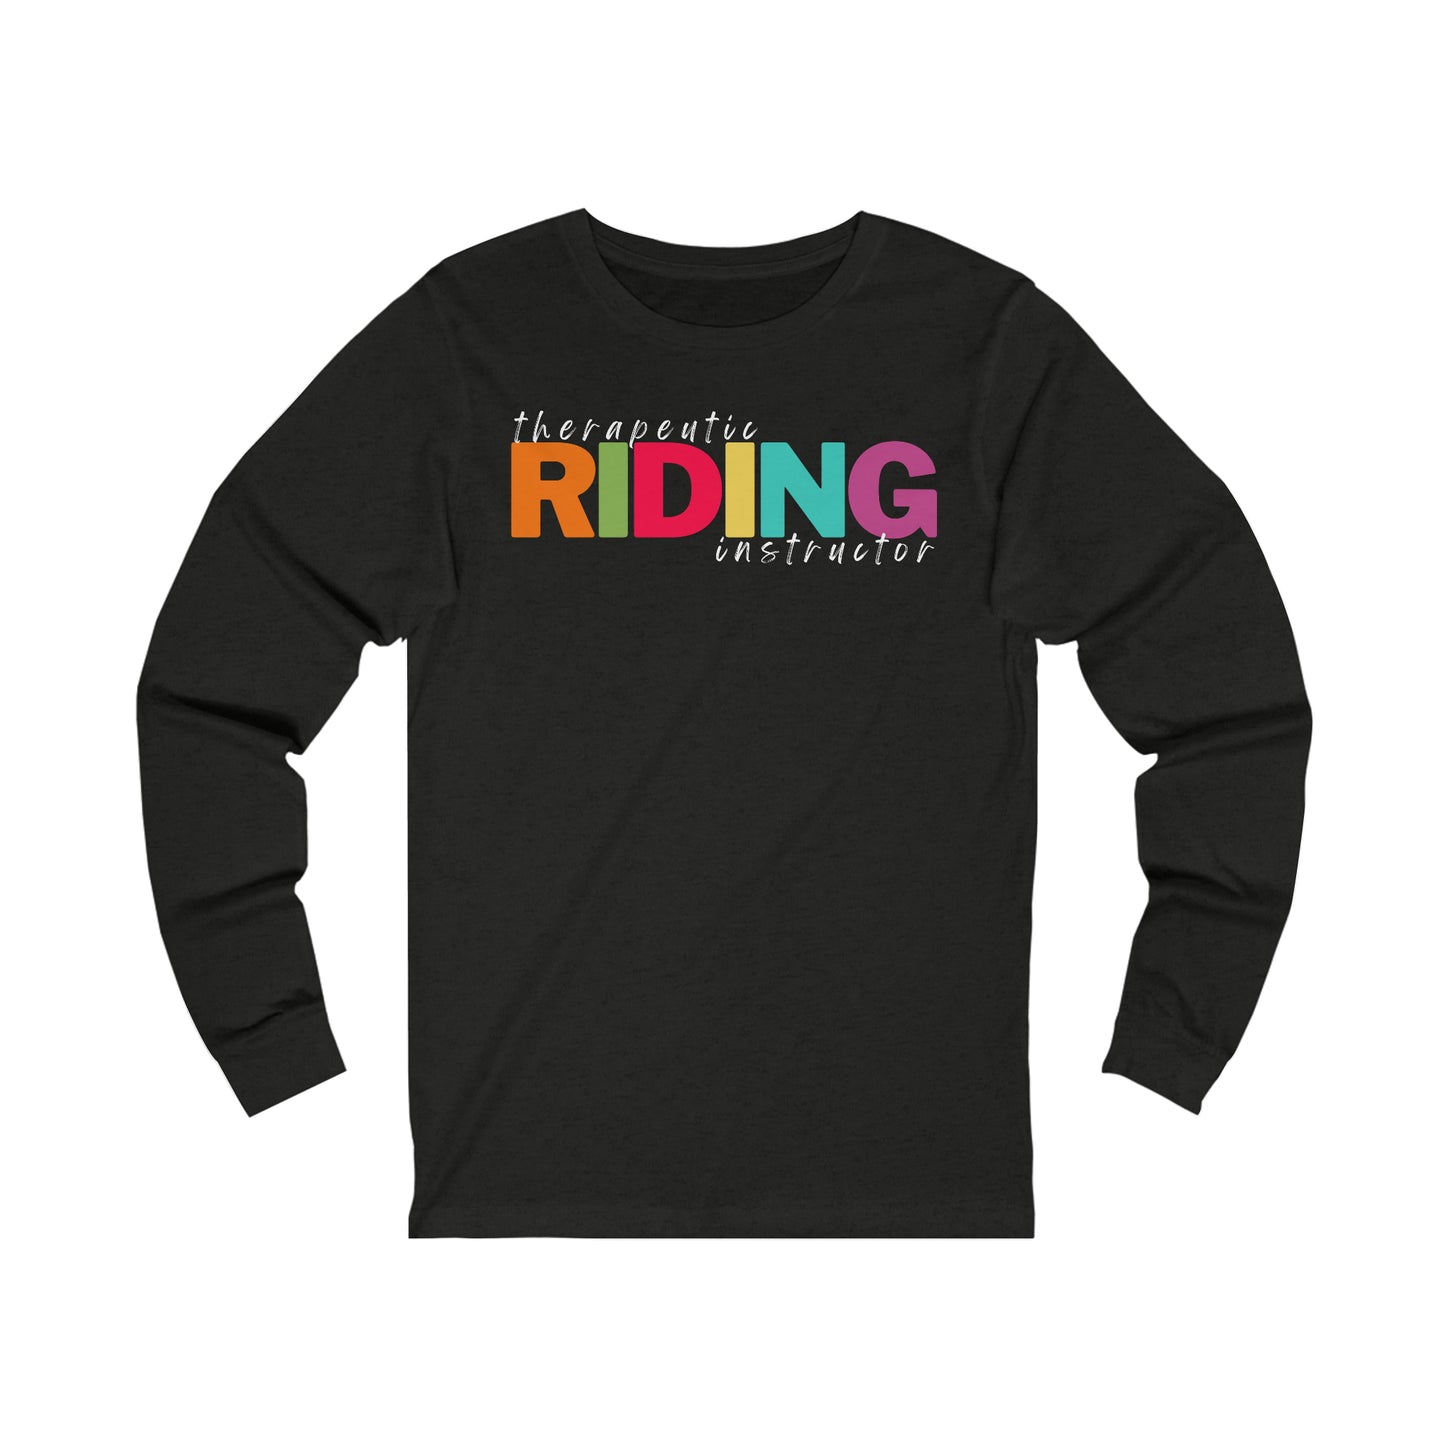 Therapeutic Riding Instructor- unisex long sleeve shirt